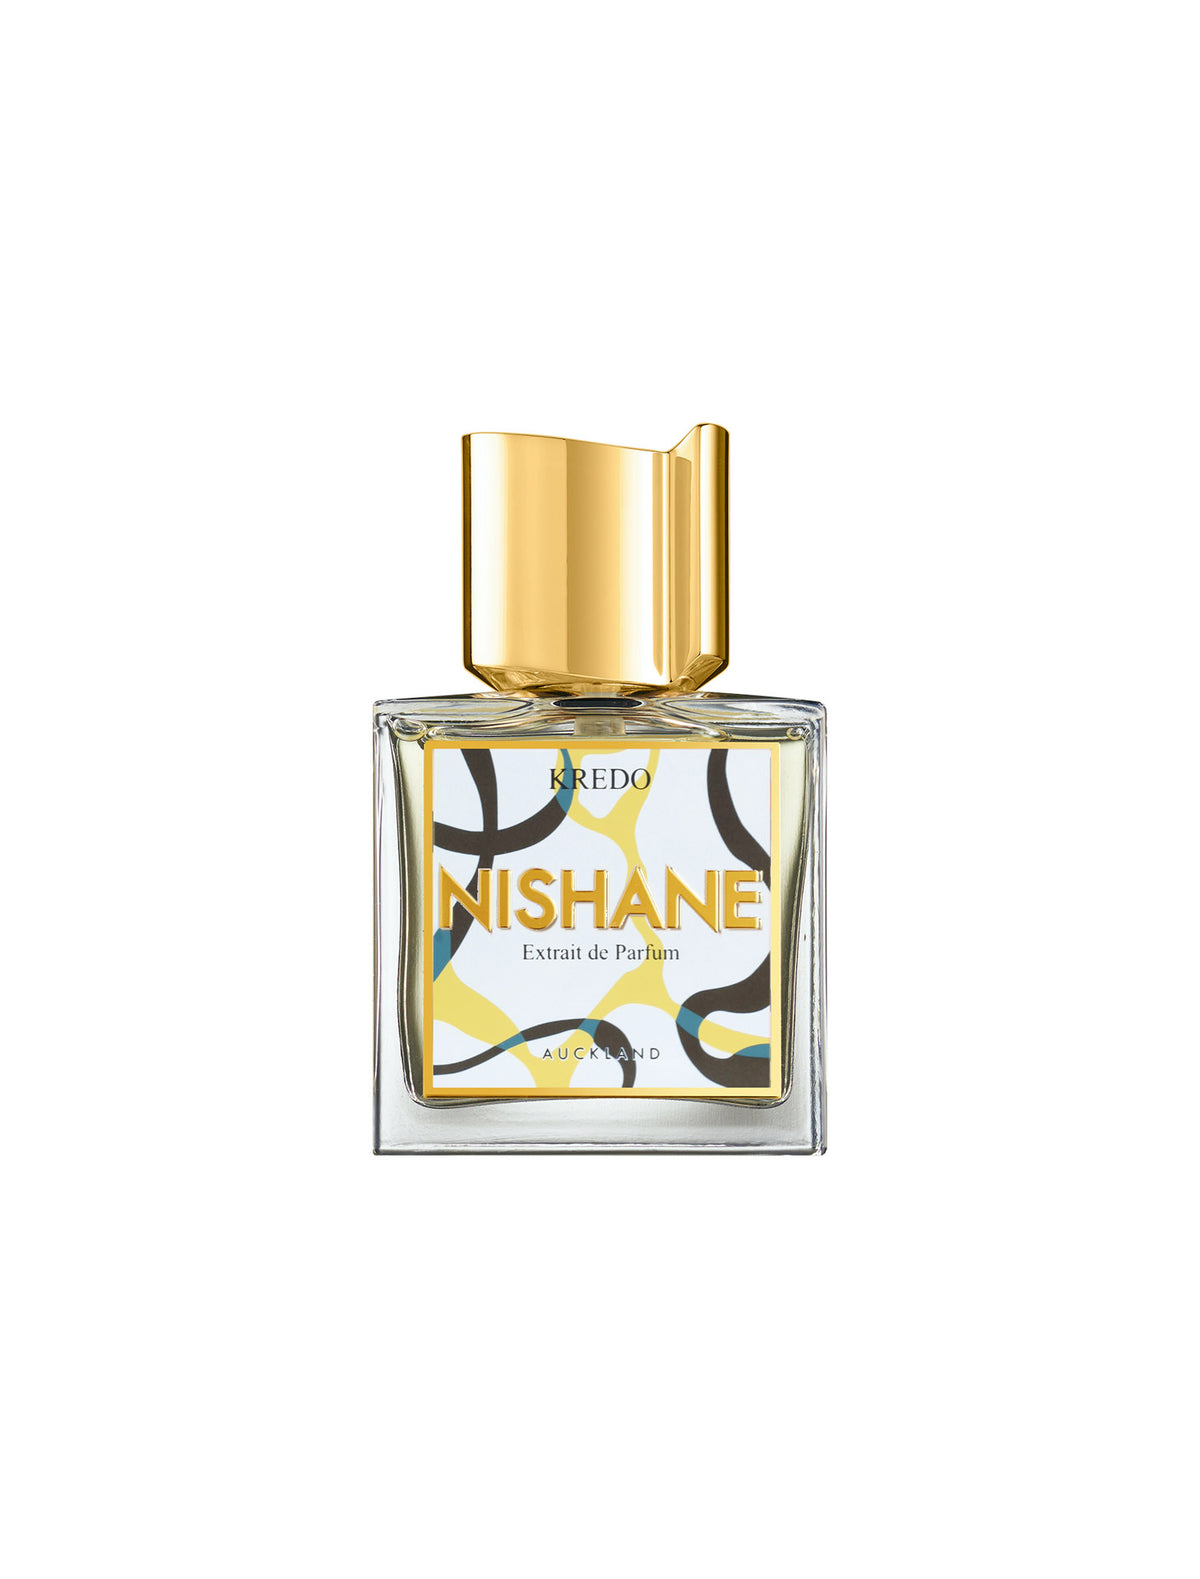 Nishane Kredo Extrait de Parfum 100ML